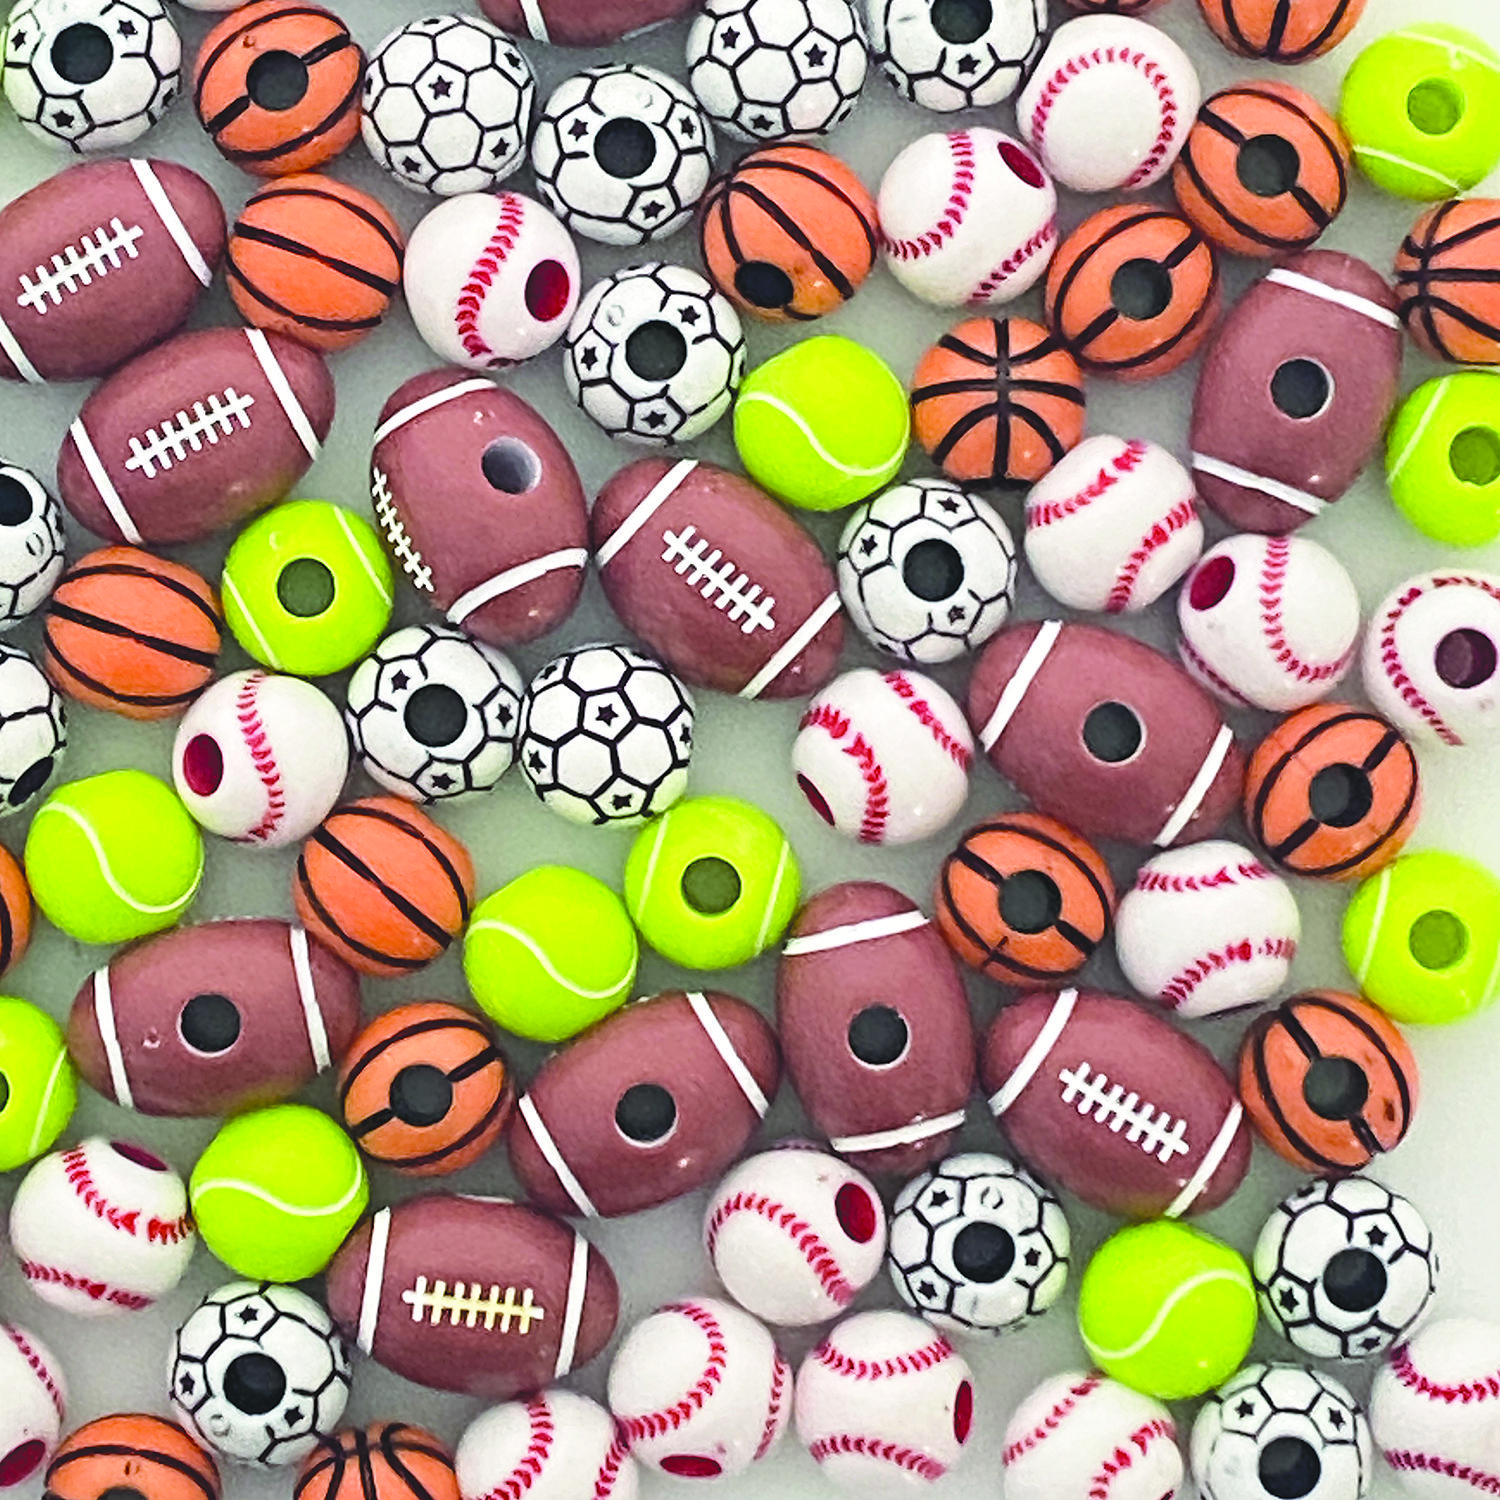 * Assorted sport beads